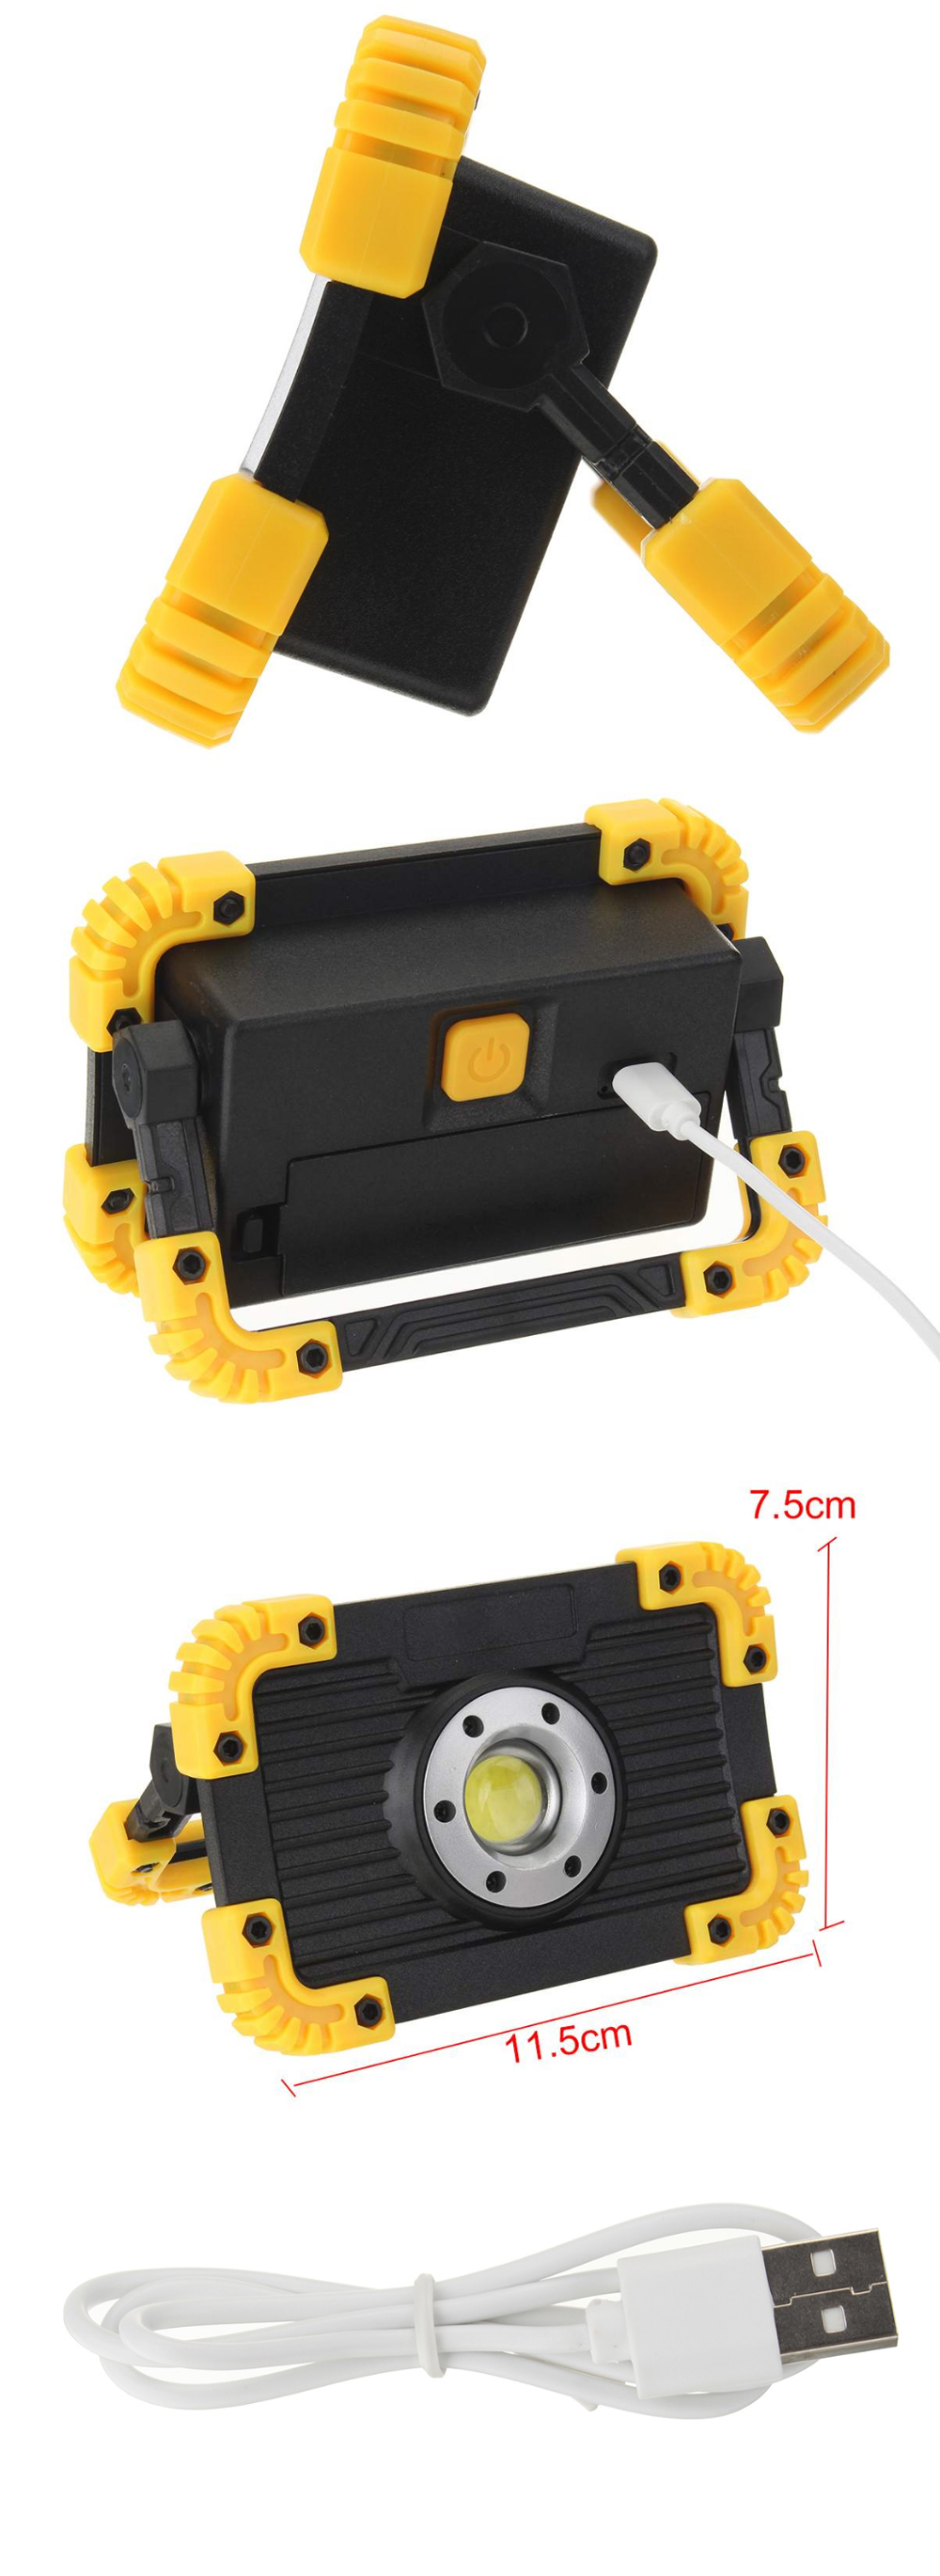 XANESreg-3-Modes-350LM-Waterproof-COB-LED-Floodlight-USB-Charging-Outdoor-Spot-Work-Lamp-Camping-Por-1763760-3